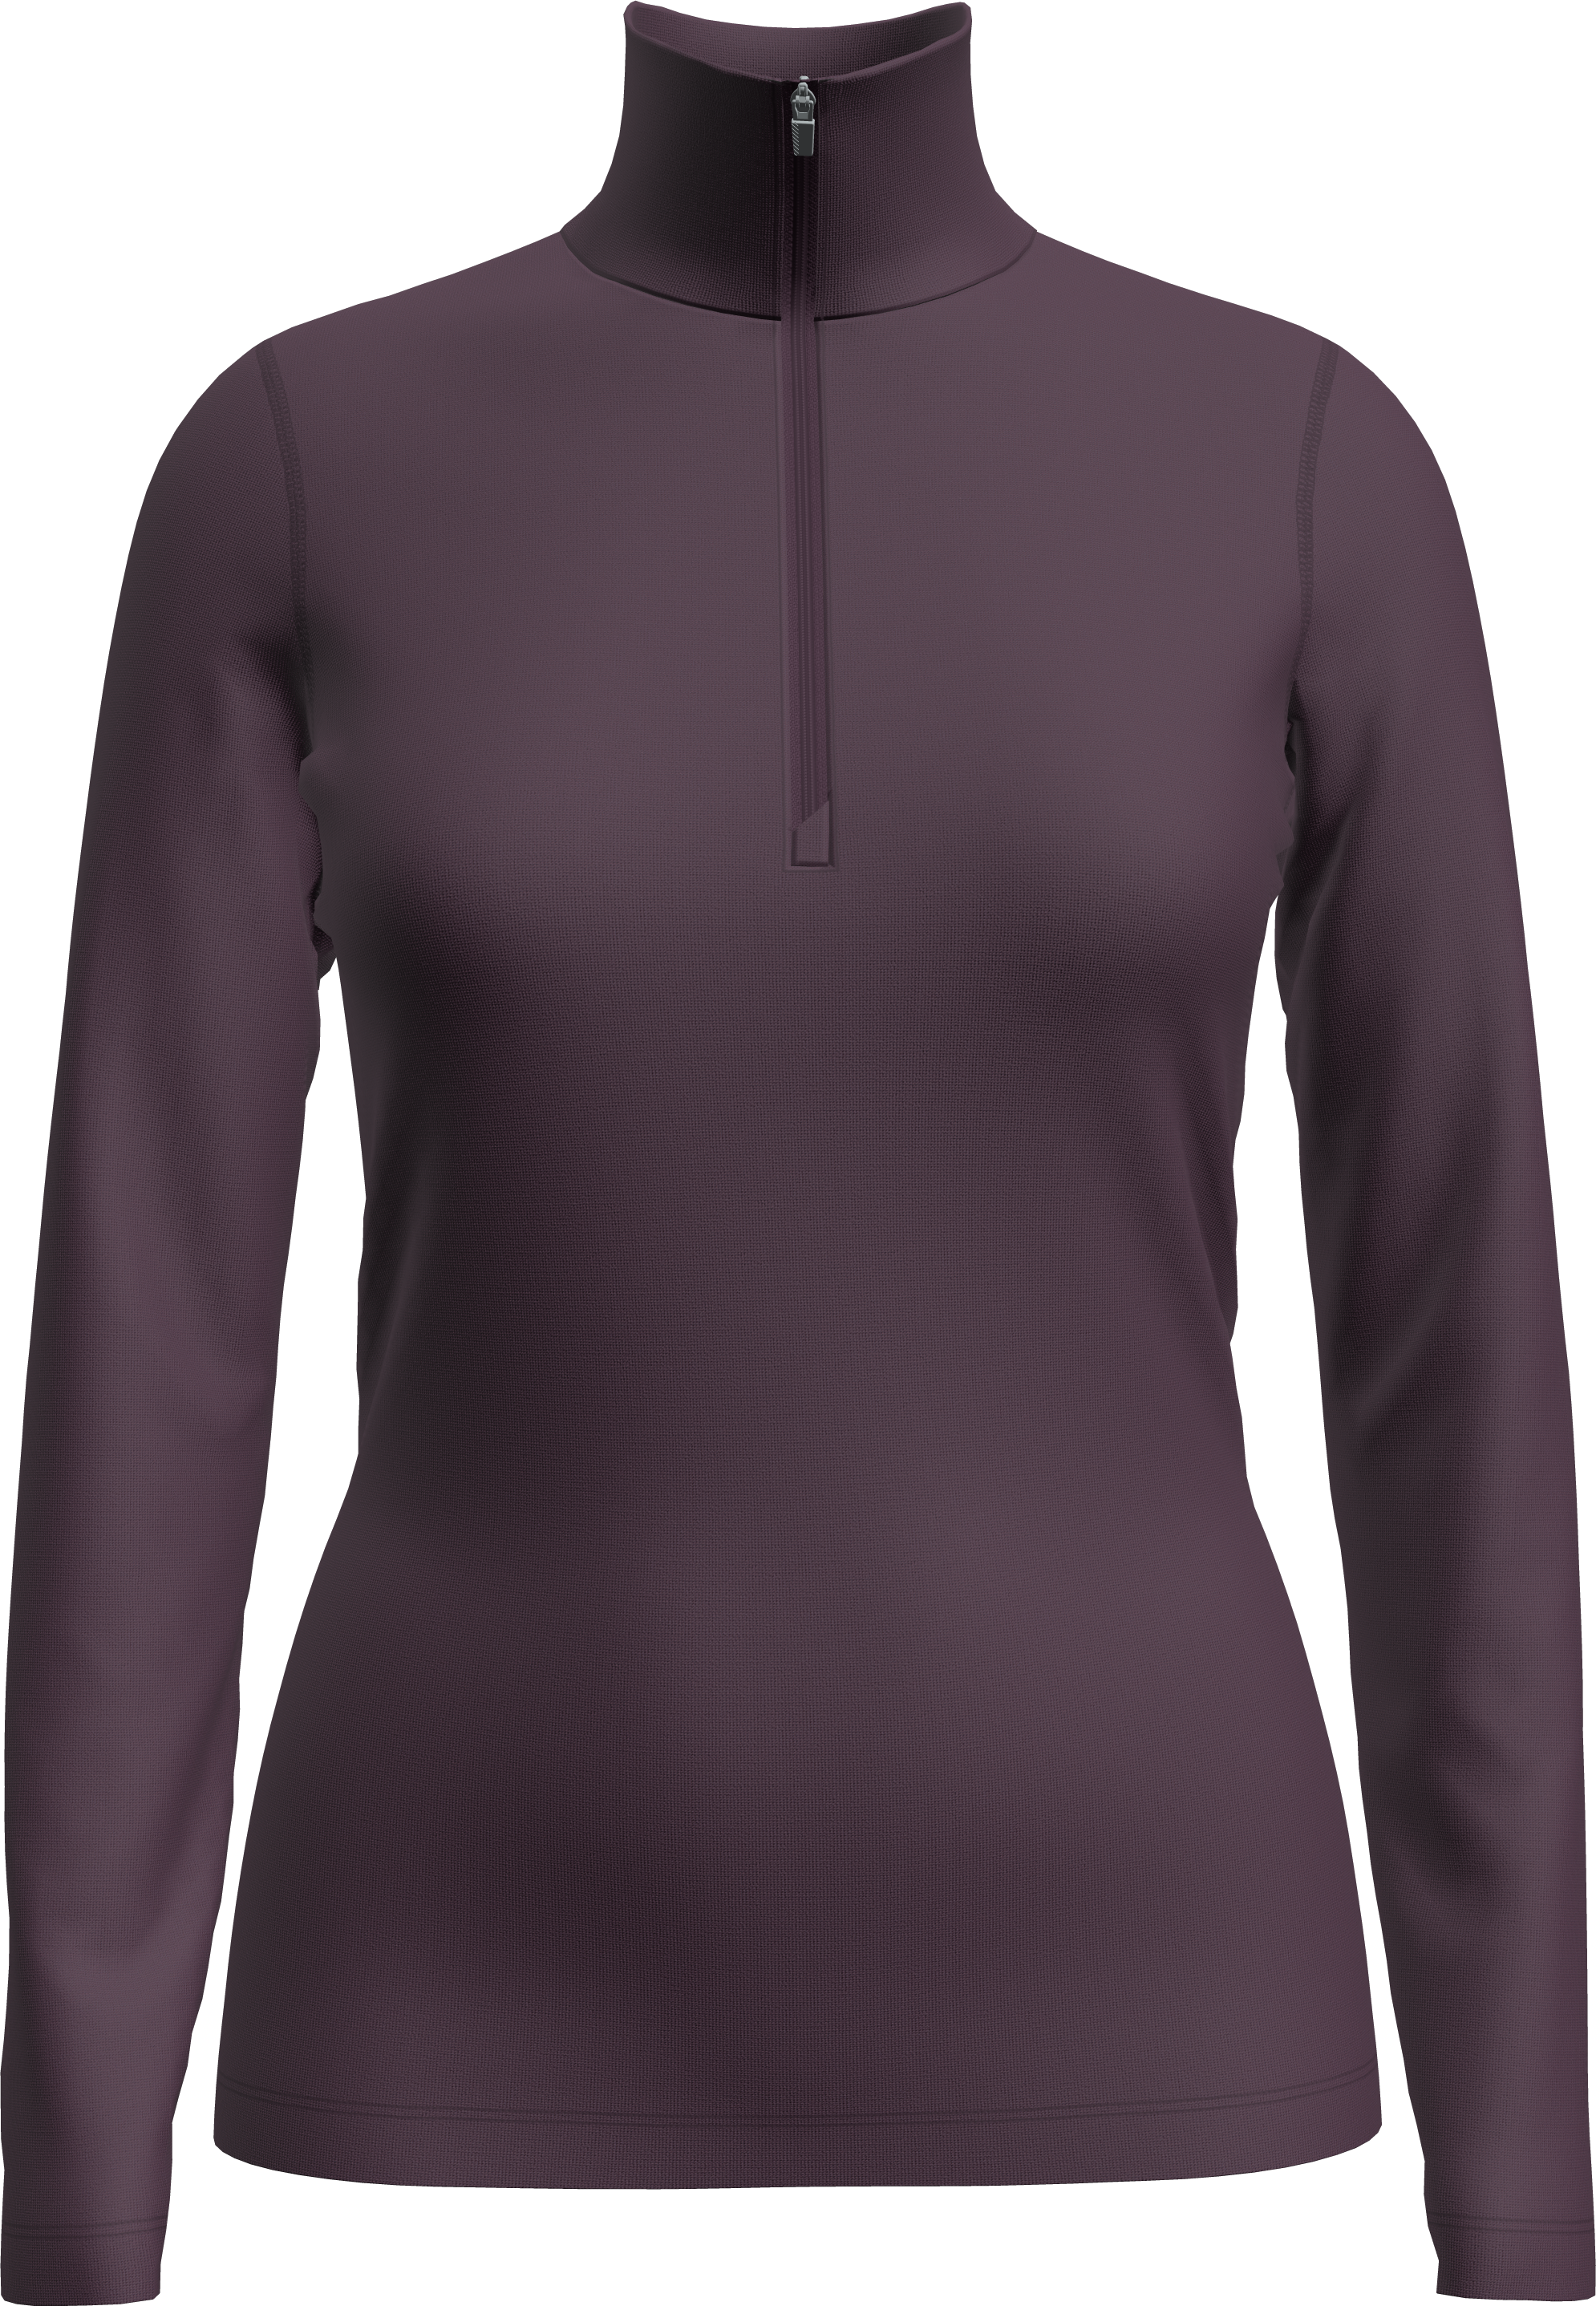 Women's Merino 260 Tech Long Sleeve Half Zip Thermal Top Nightshade